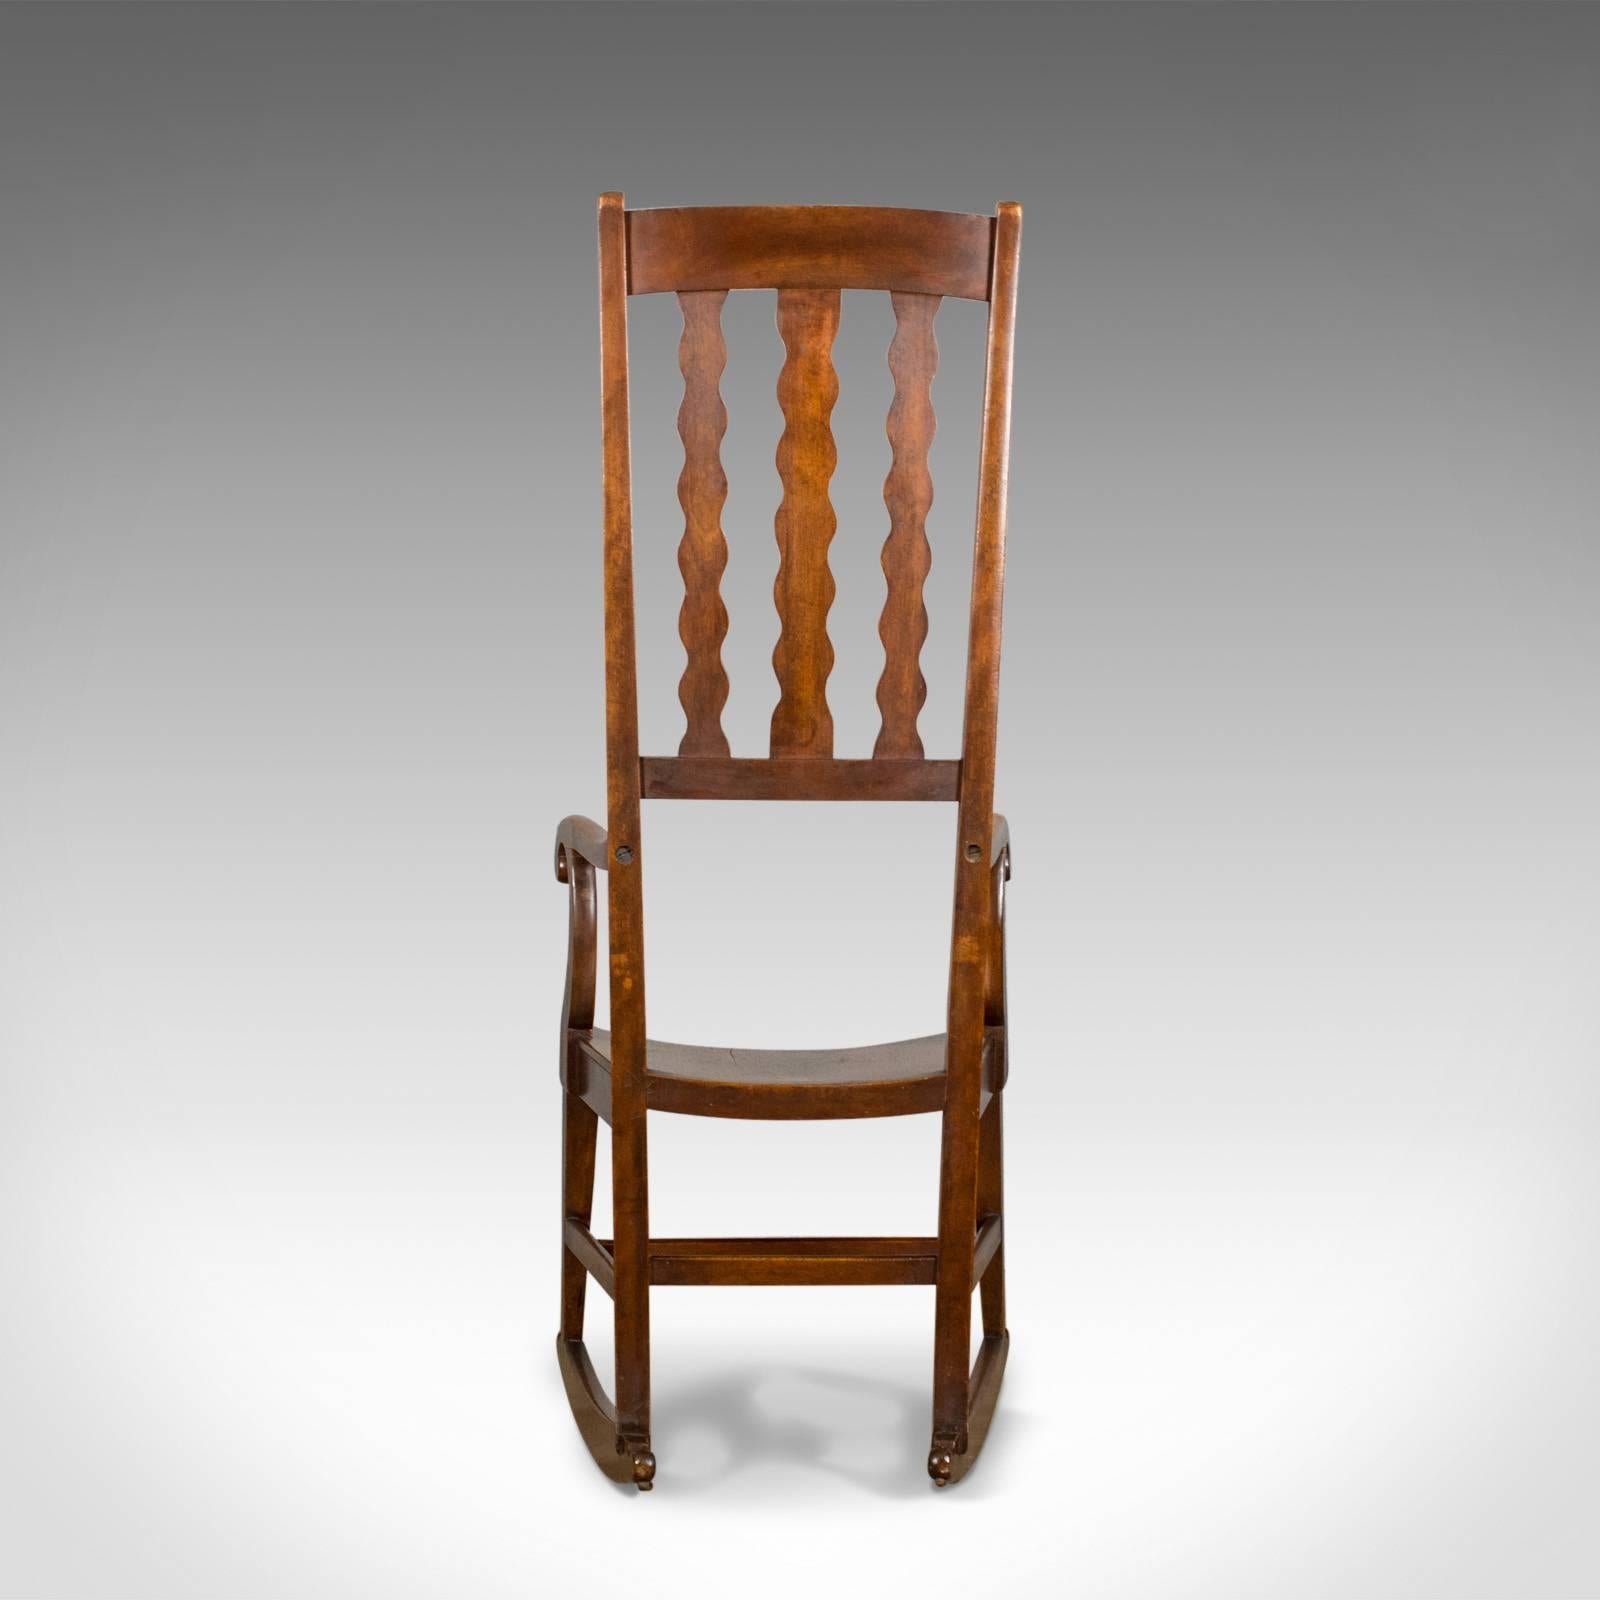 19th Century Antique Rocking Chair English Victorian, Mahogany Wavy Line Rocker, circa 1850